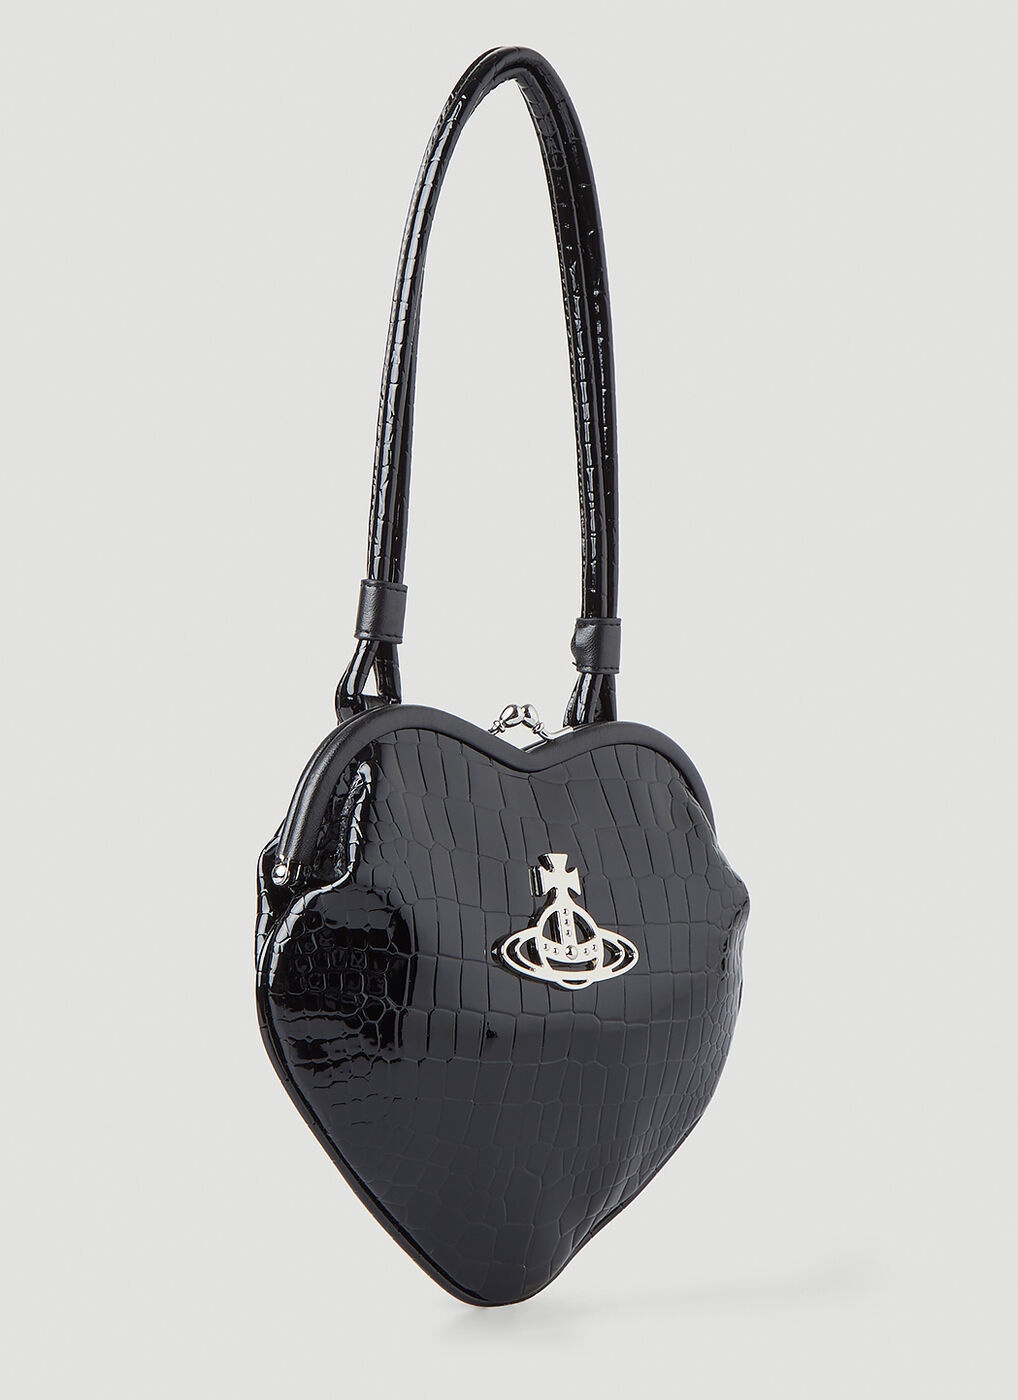 Vivienne Westwood Belle heart-shaped Metallic Tote Bag - Farfetch